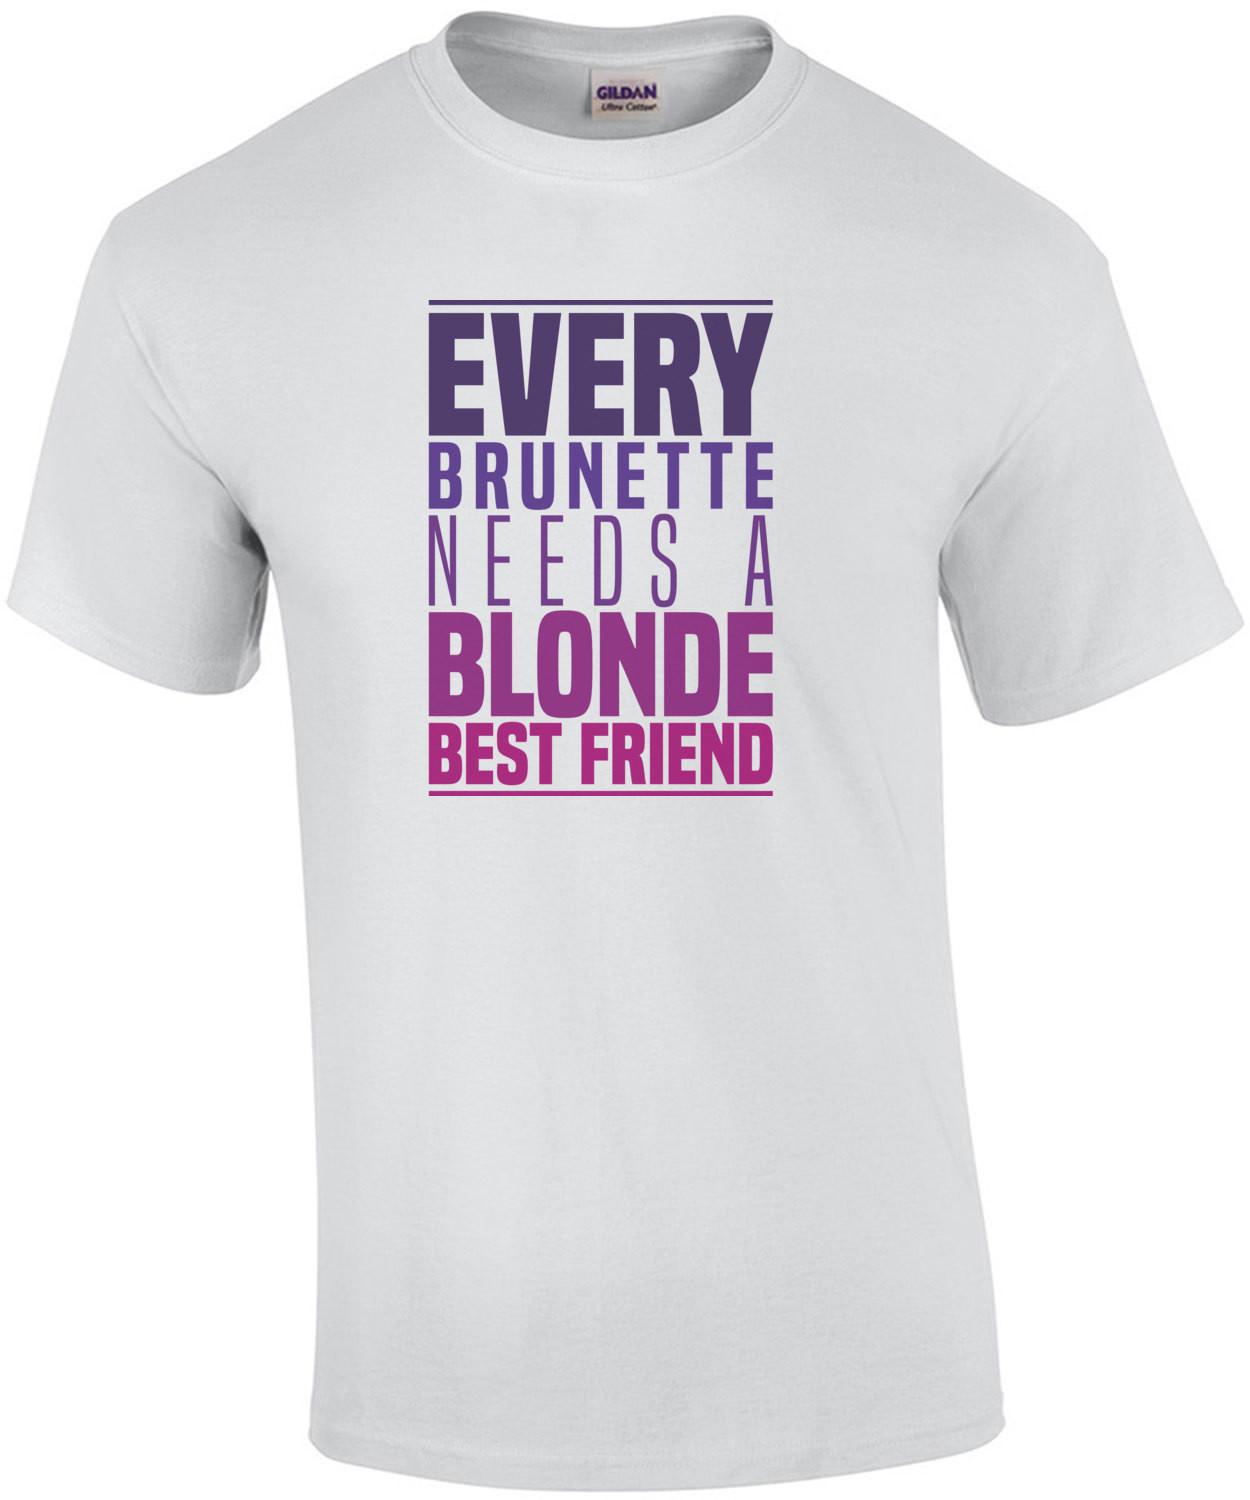 Every brunette needs a blonde best friend - funny t-shirt